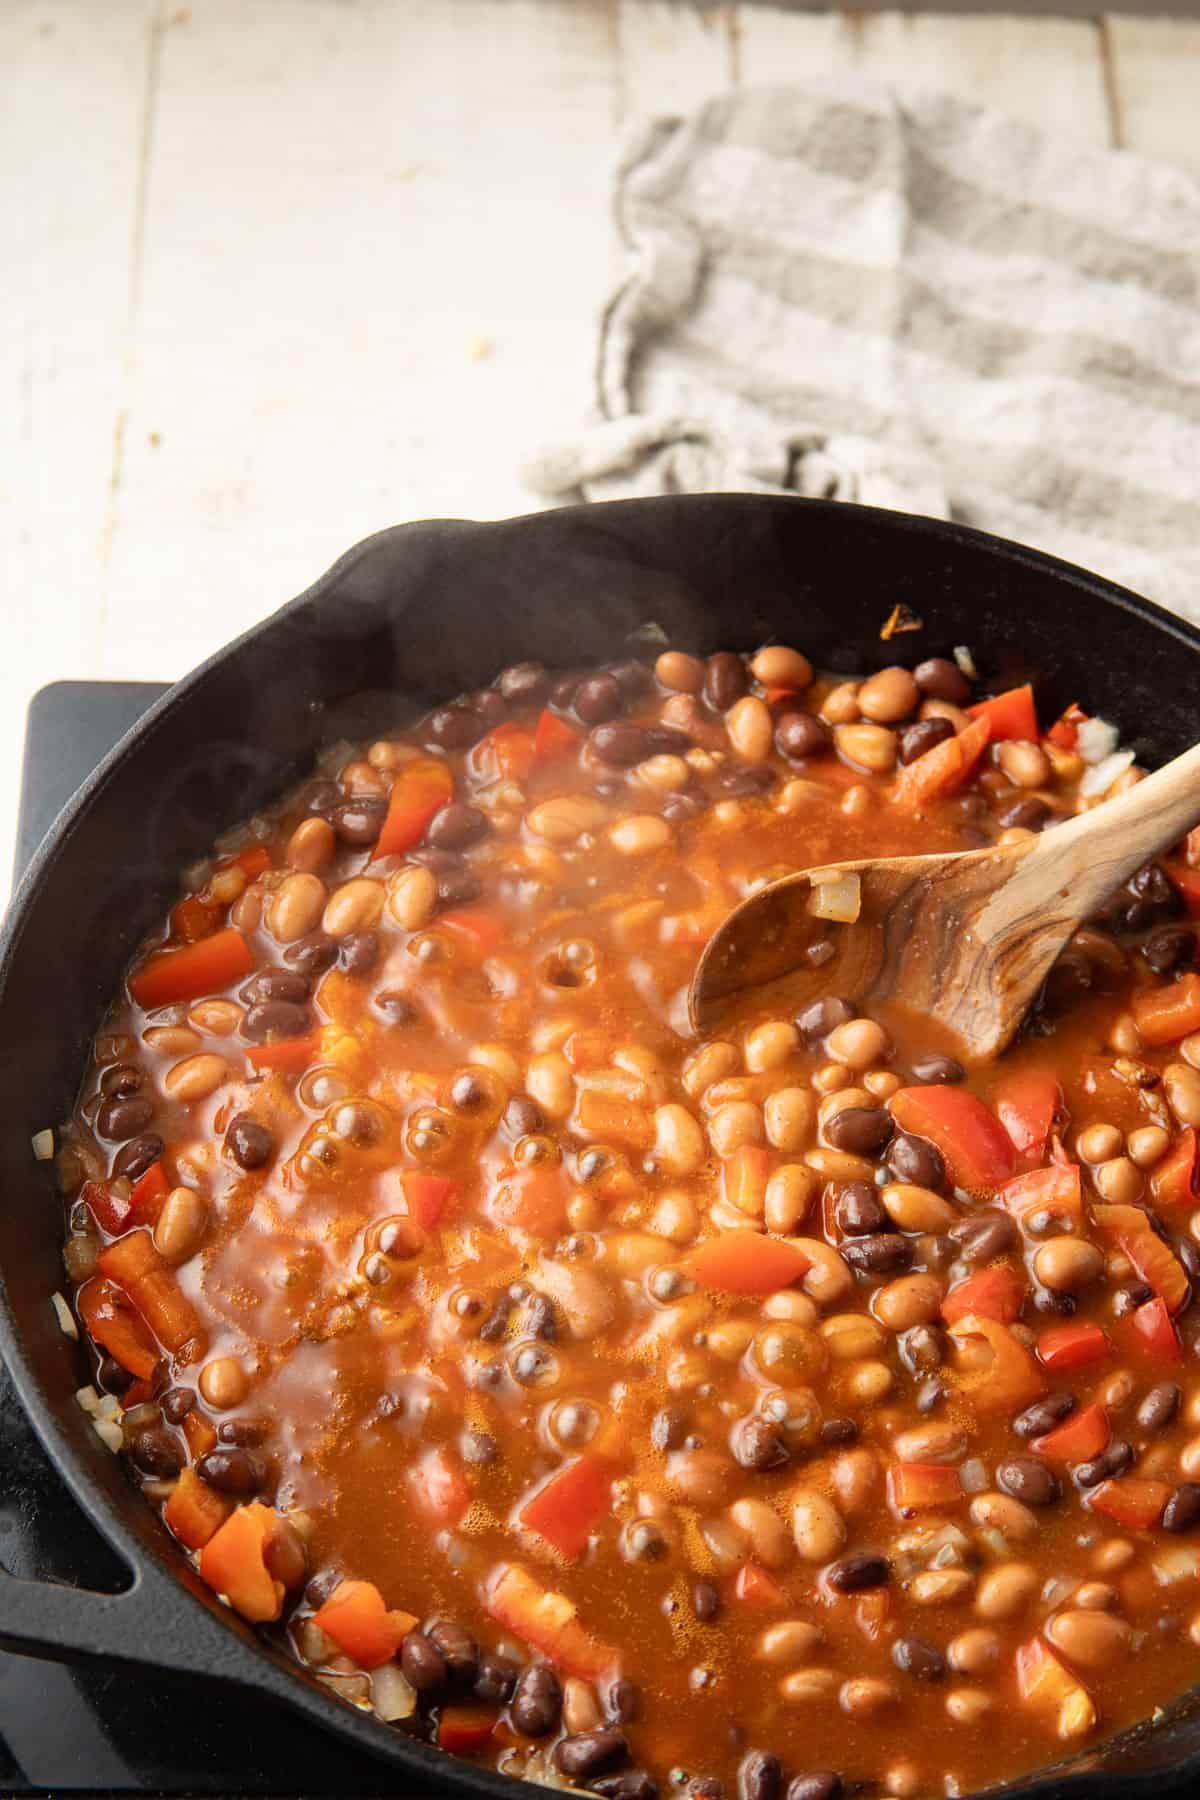 Beans simmering in enchilada sauce in a skillet.